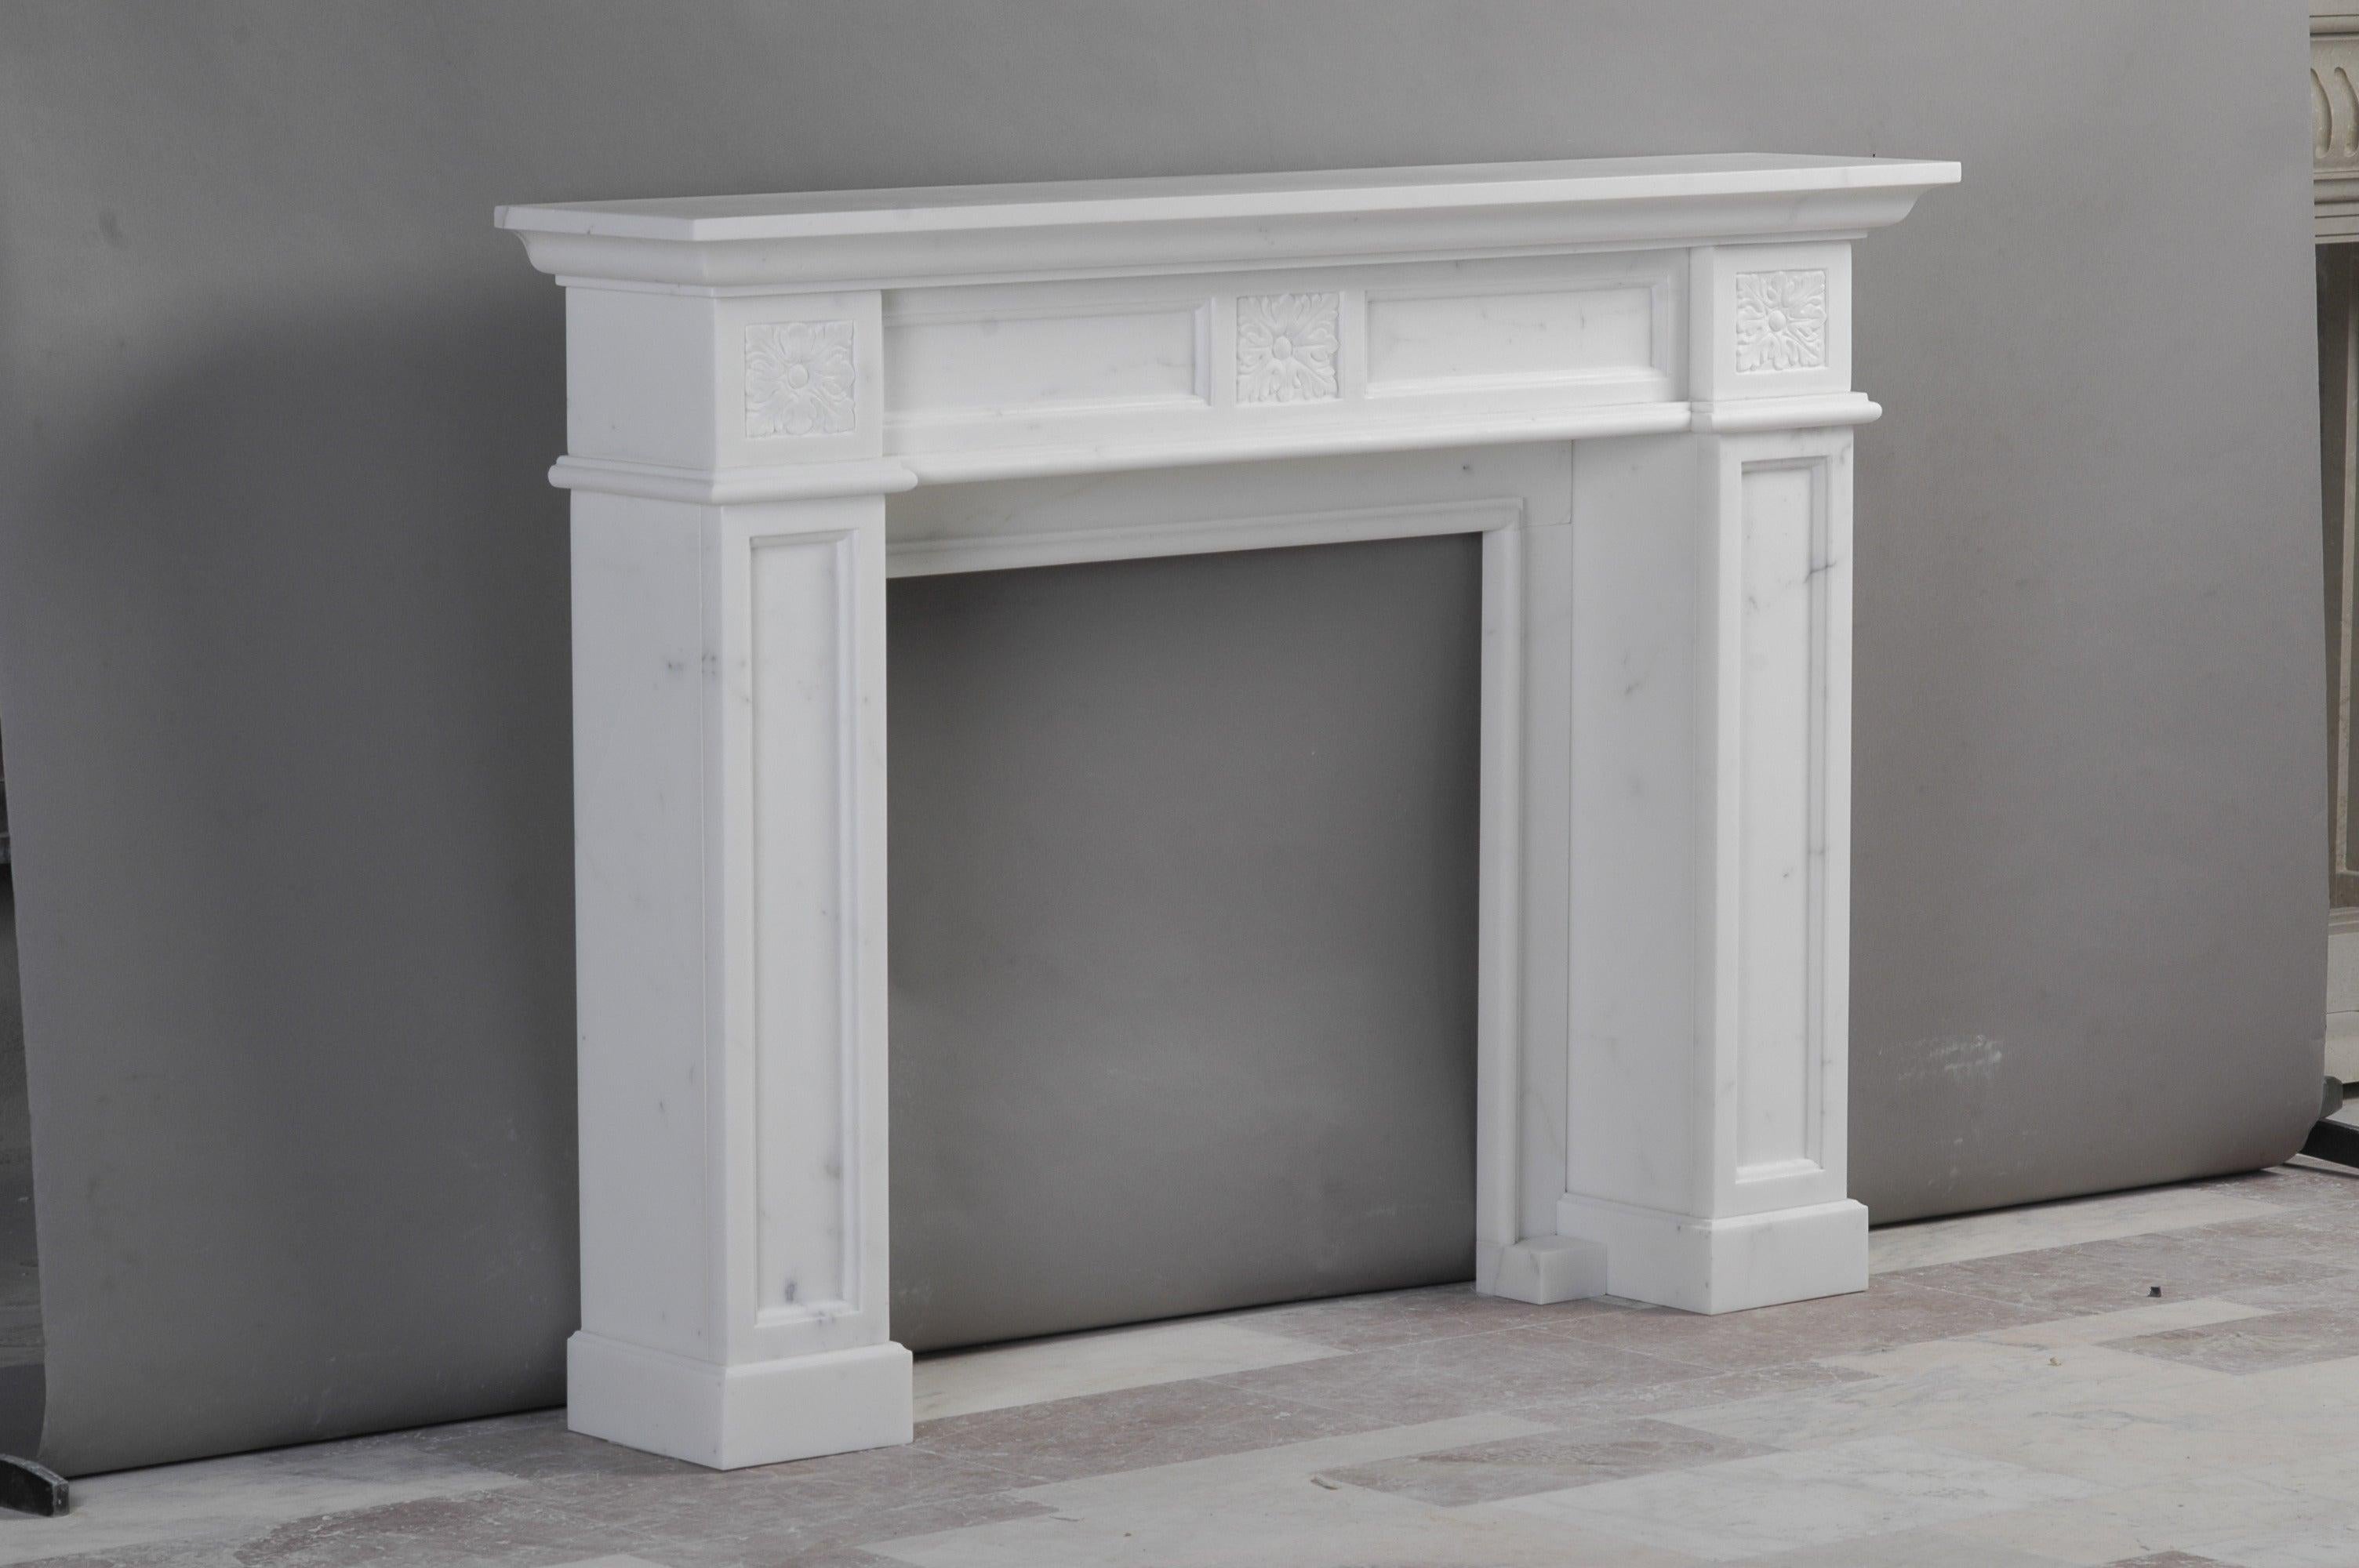 Italian London Fireplace in Bianca Carrara Marble For Sale